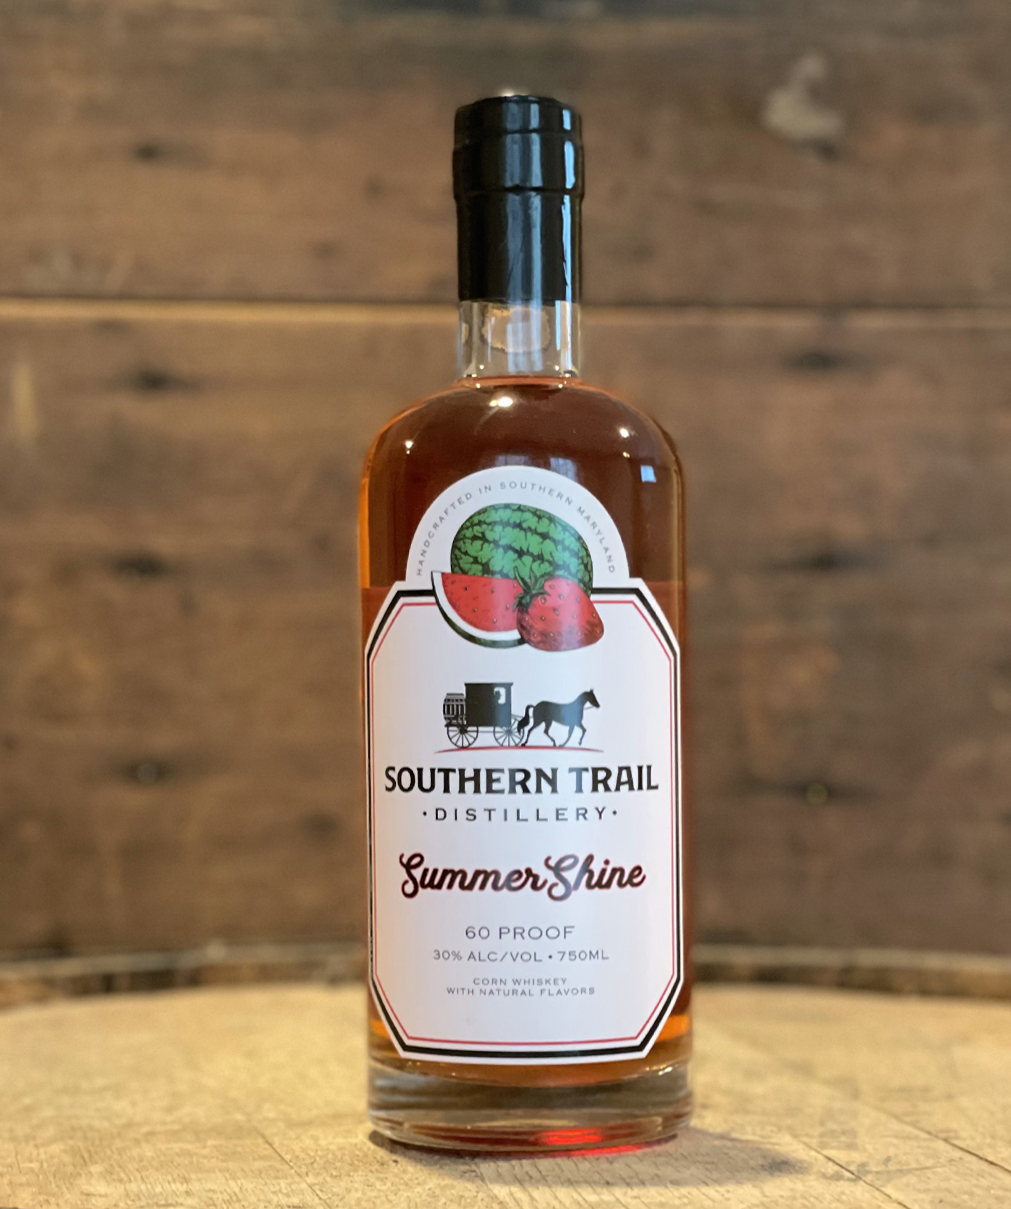 SummerShine Southern Trail Distillery